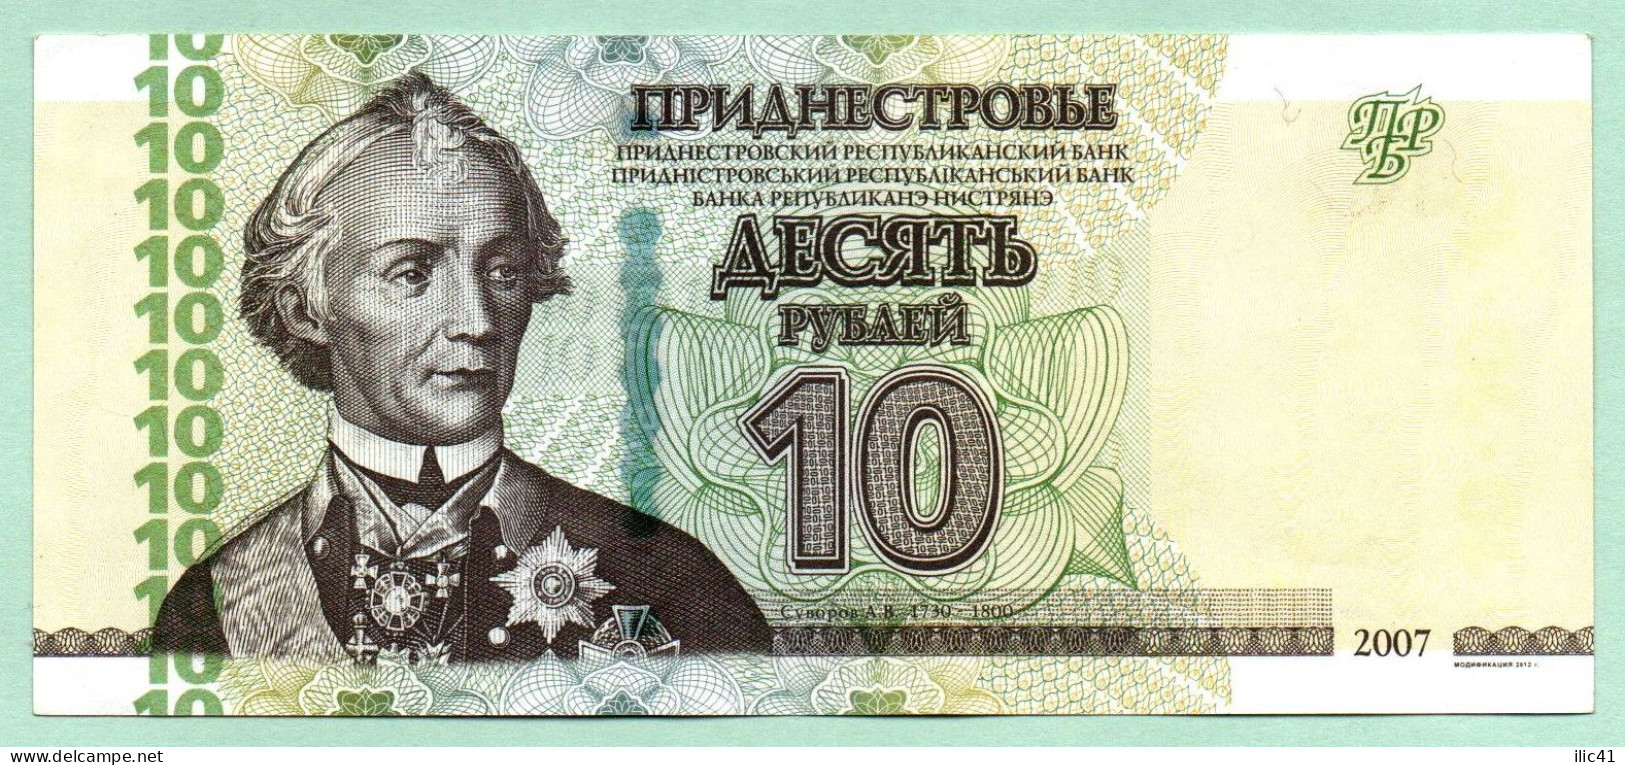 Moldova Moldova  10 Bancnote 2012 Din Transnistria 10 Rublu Din Toate Cele Trei Emisiuni UNC - Moldawien (Moldau)